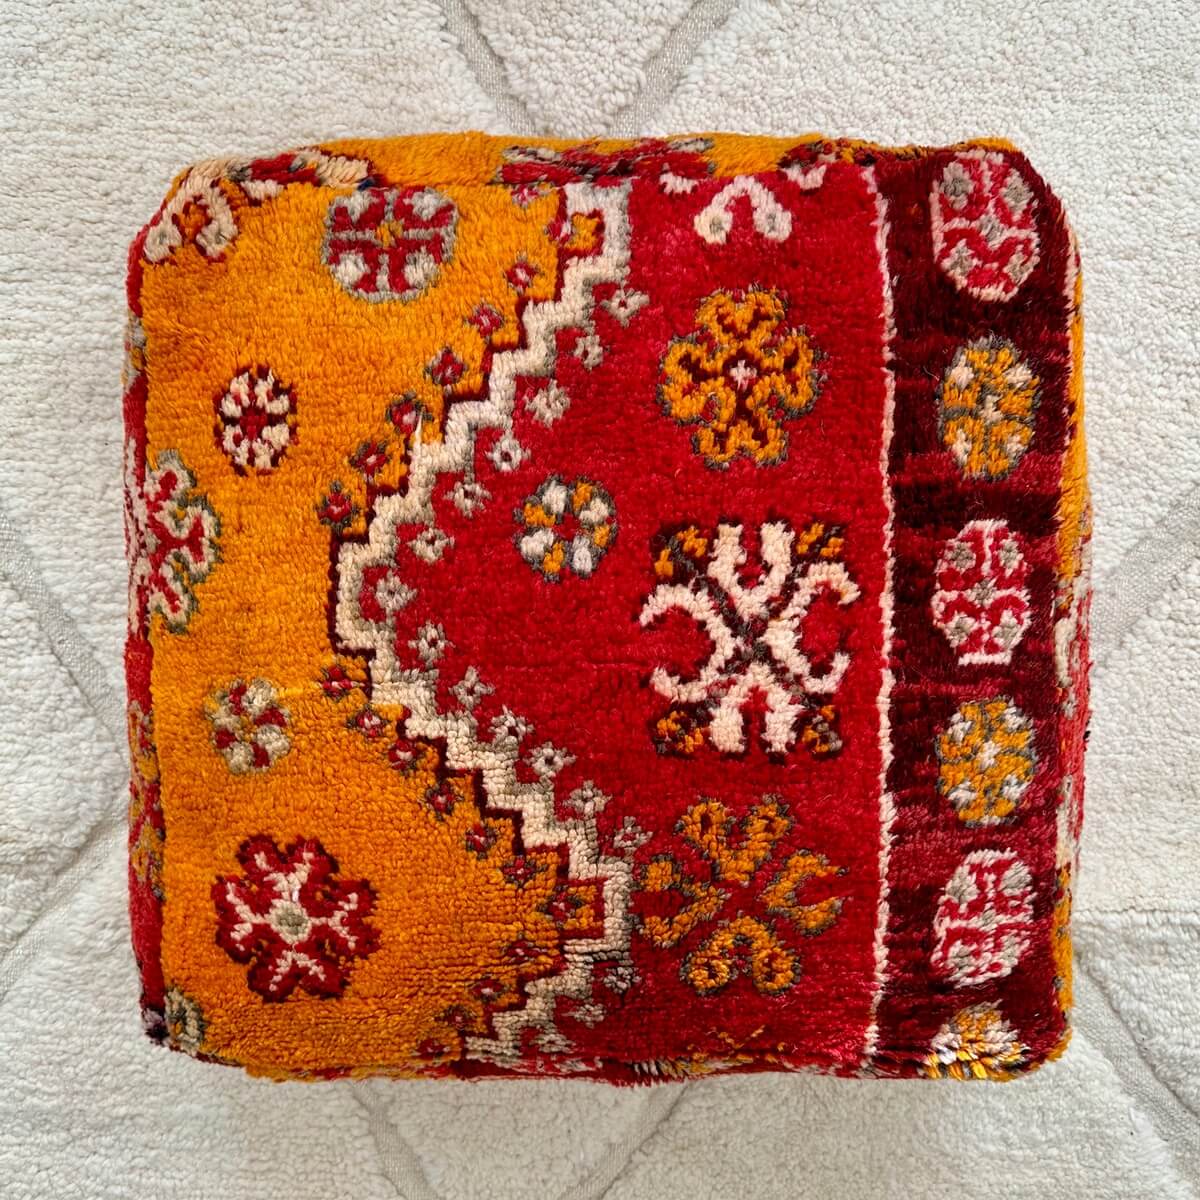 perna de podea marocana vintage creata dintr-un covor din lana multicolor